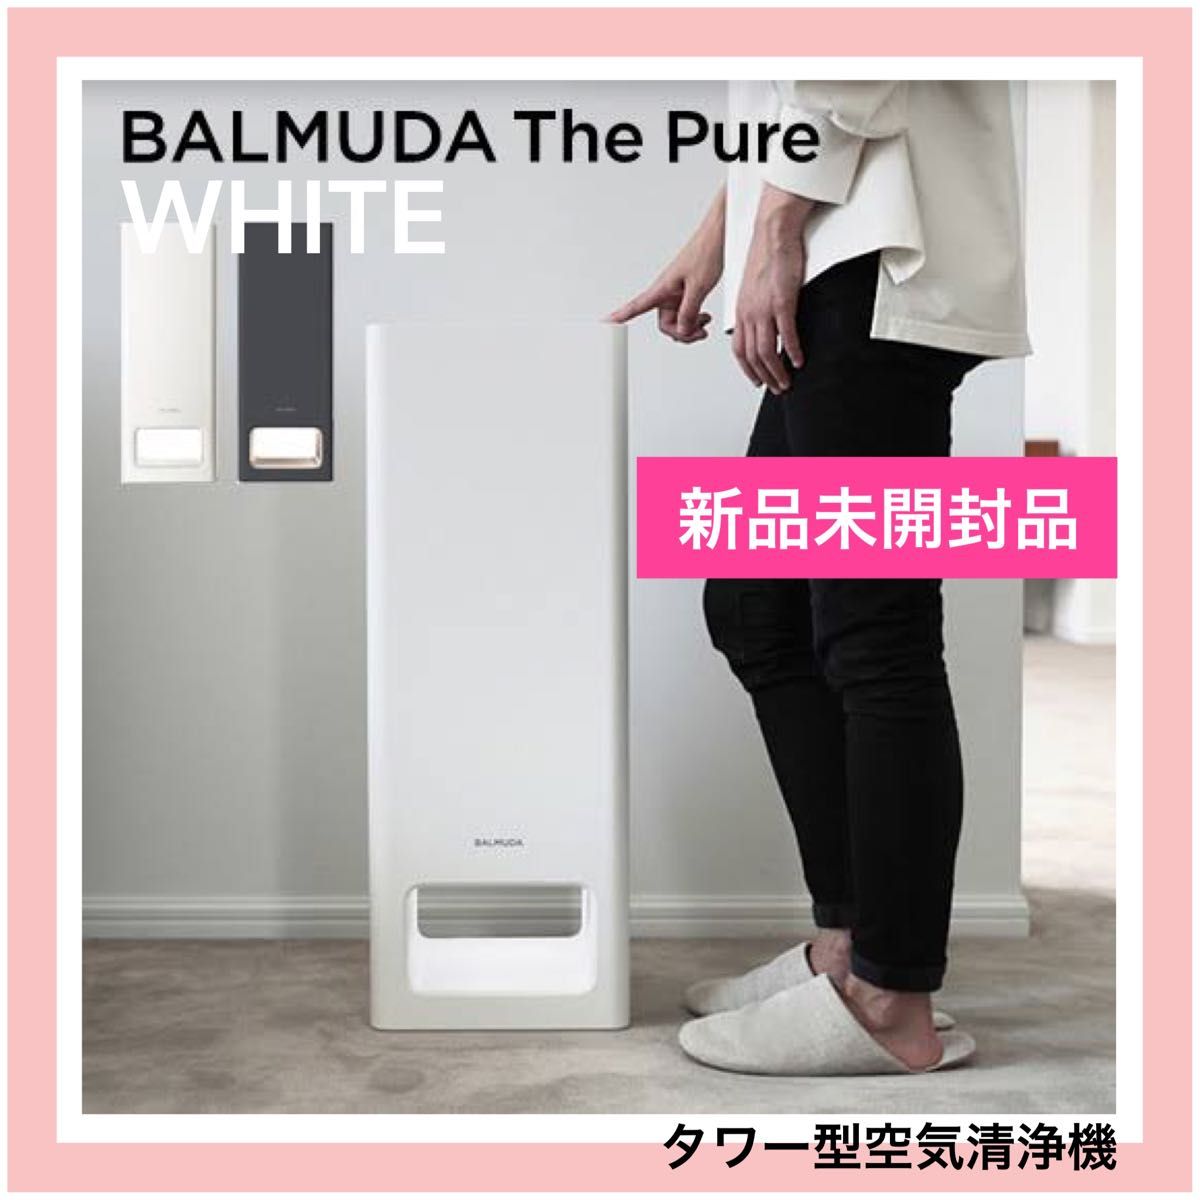 BALMUDA バルミューダザピュア A01A-WH WHITE 未使用 - 空気清浄機